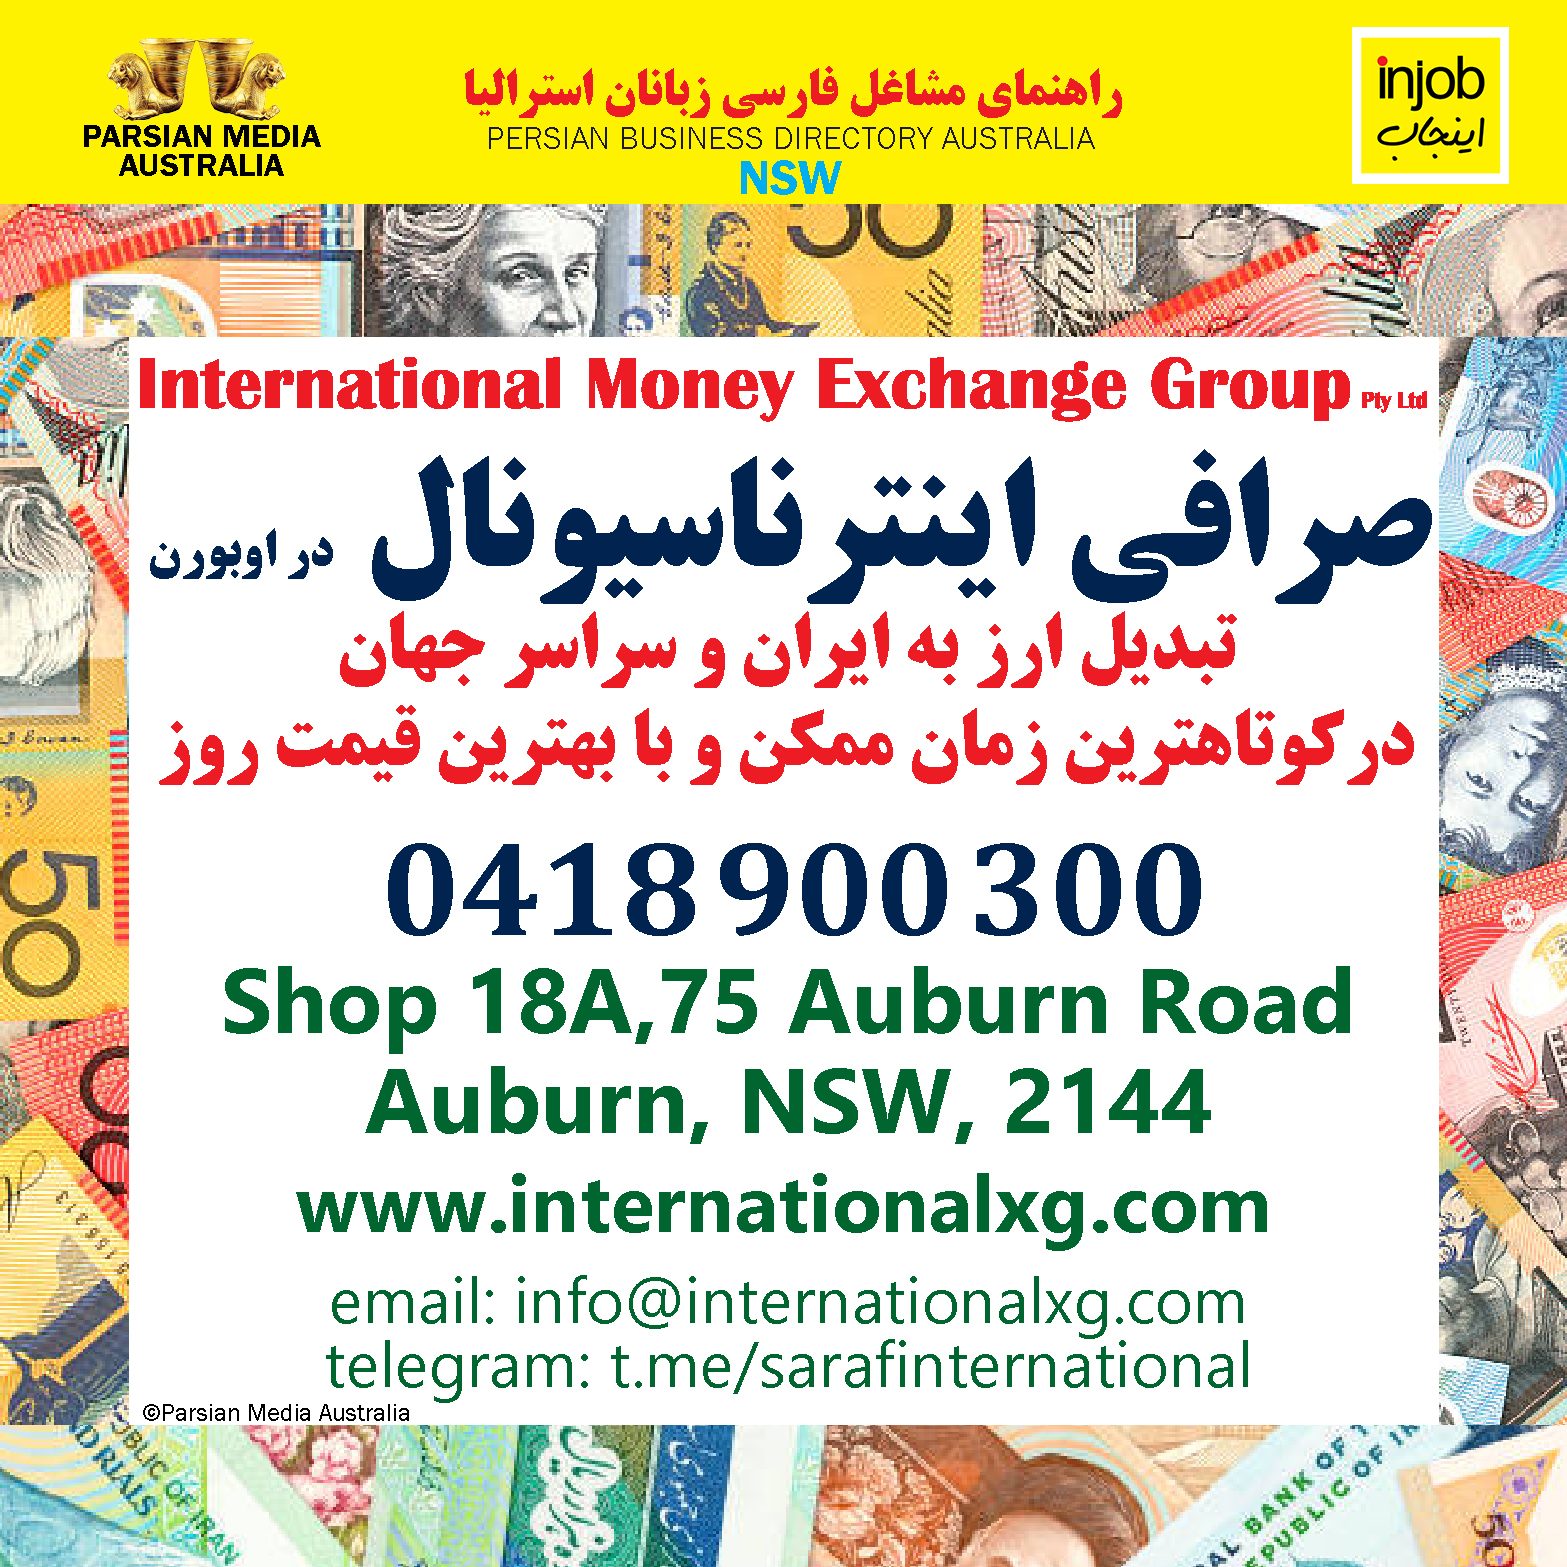 International-Money Exchange-Injob-2021-2022-online-icon.jpg